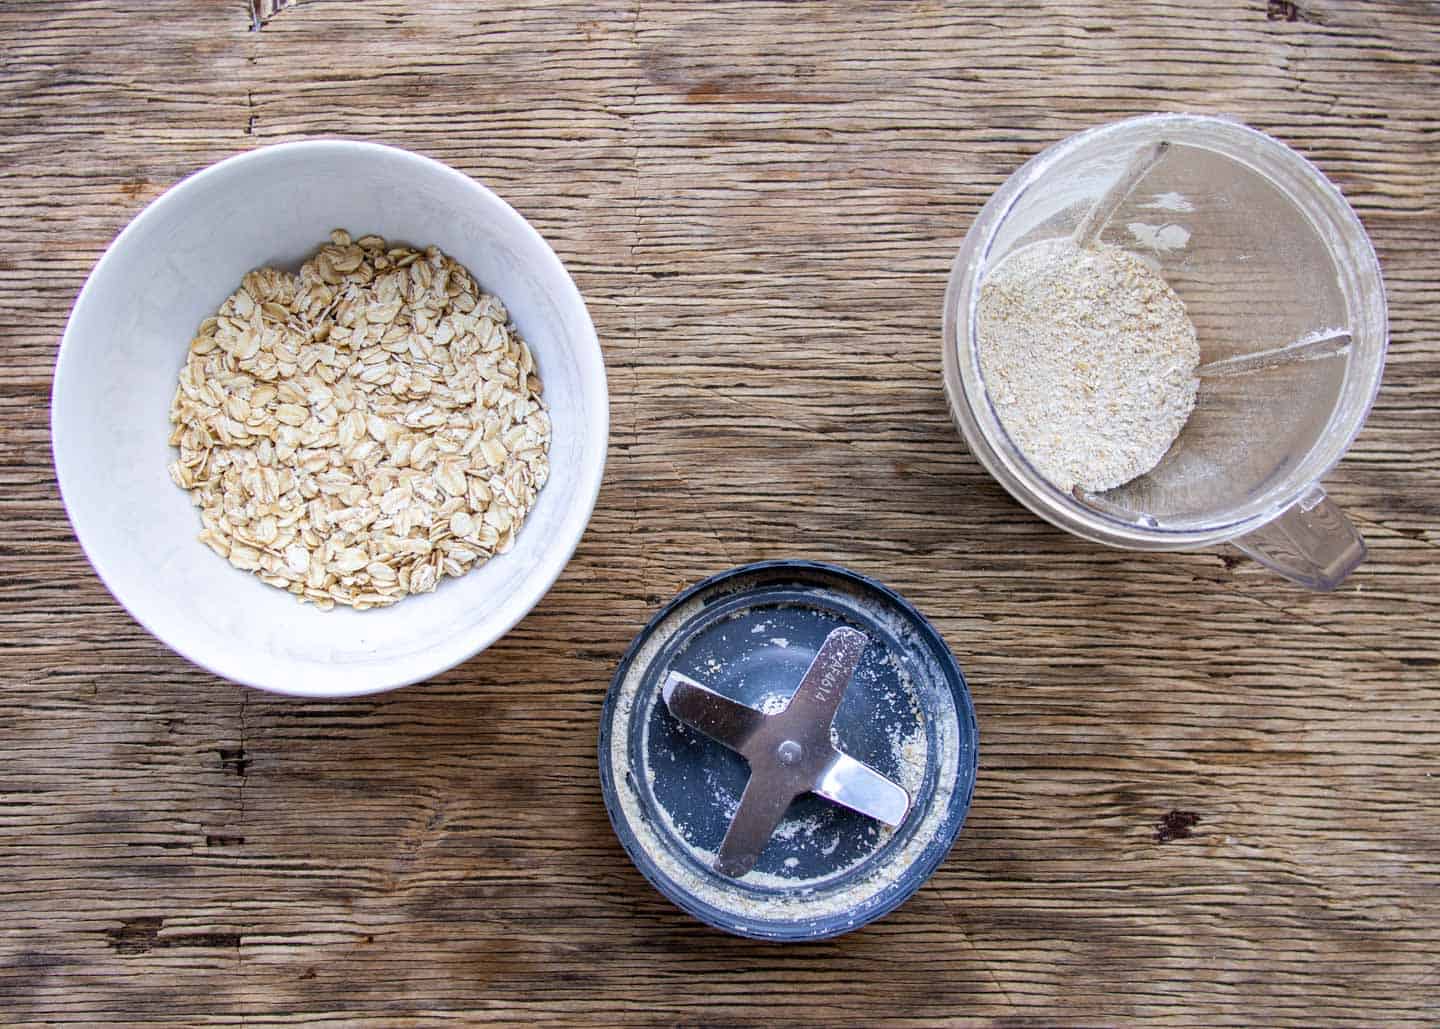 Blender and oats to make oat flour